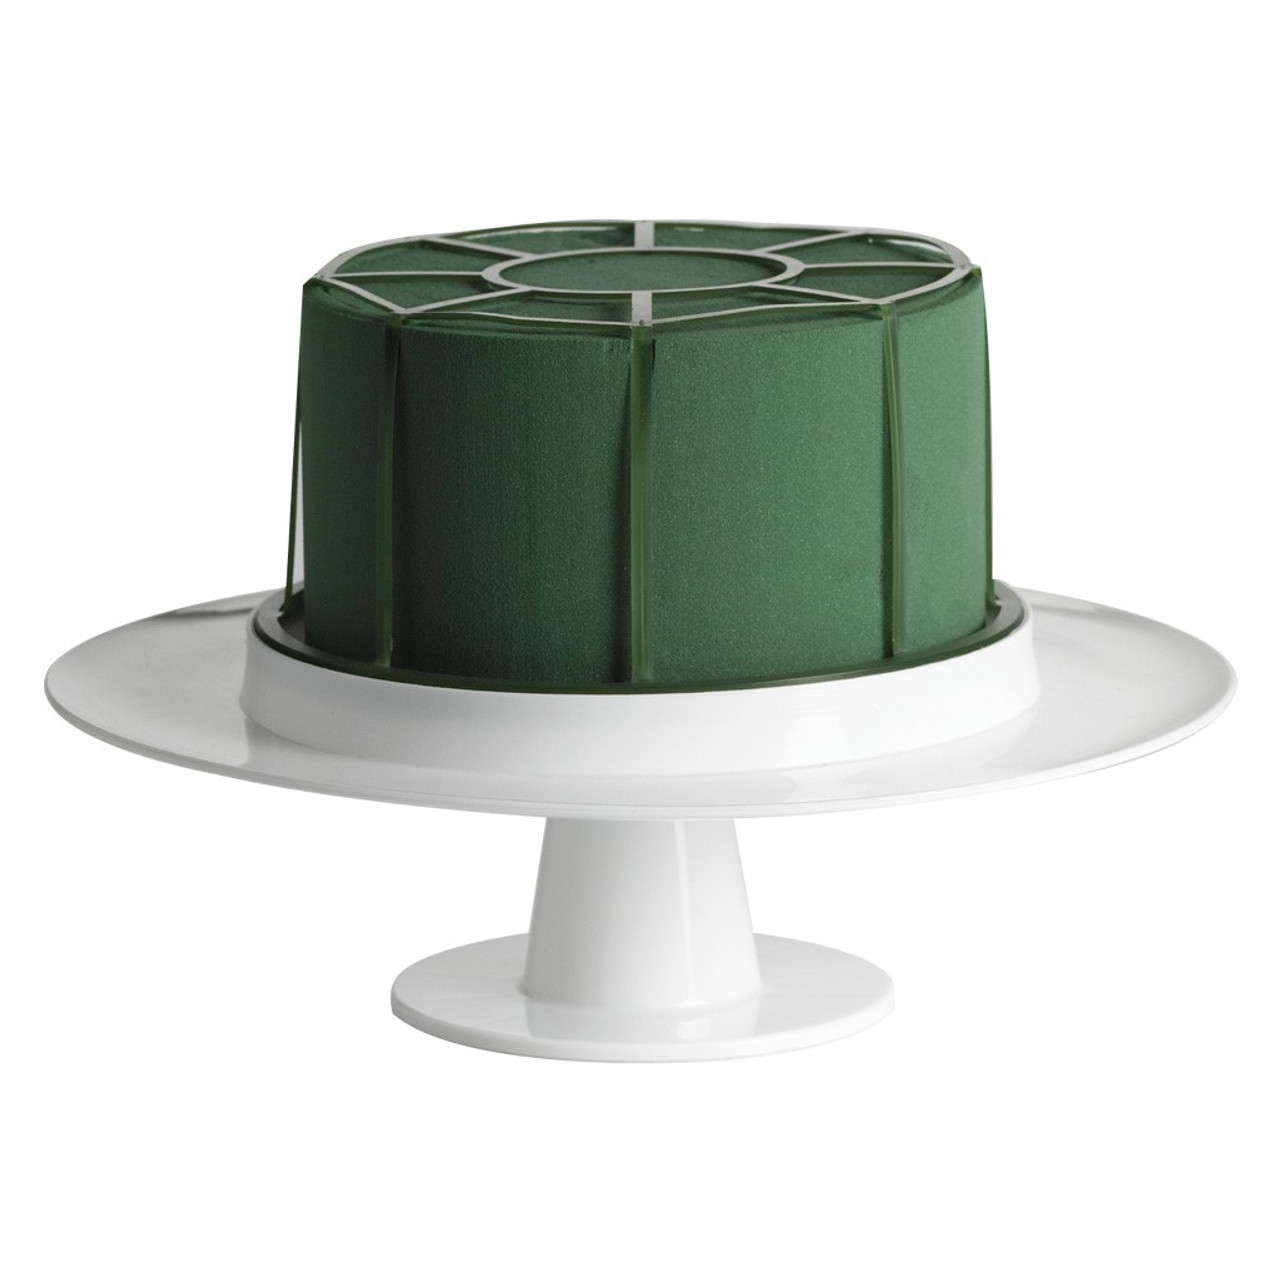 Amazon.com: Juvale 4 Piece Round Foam Cake Dummy Set for Decorating, 12